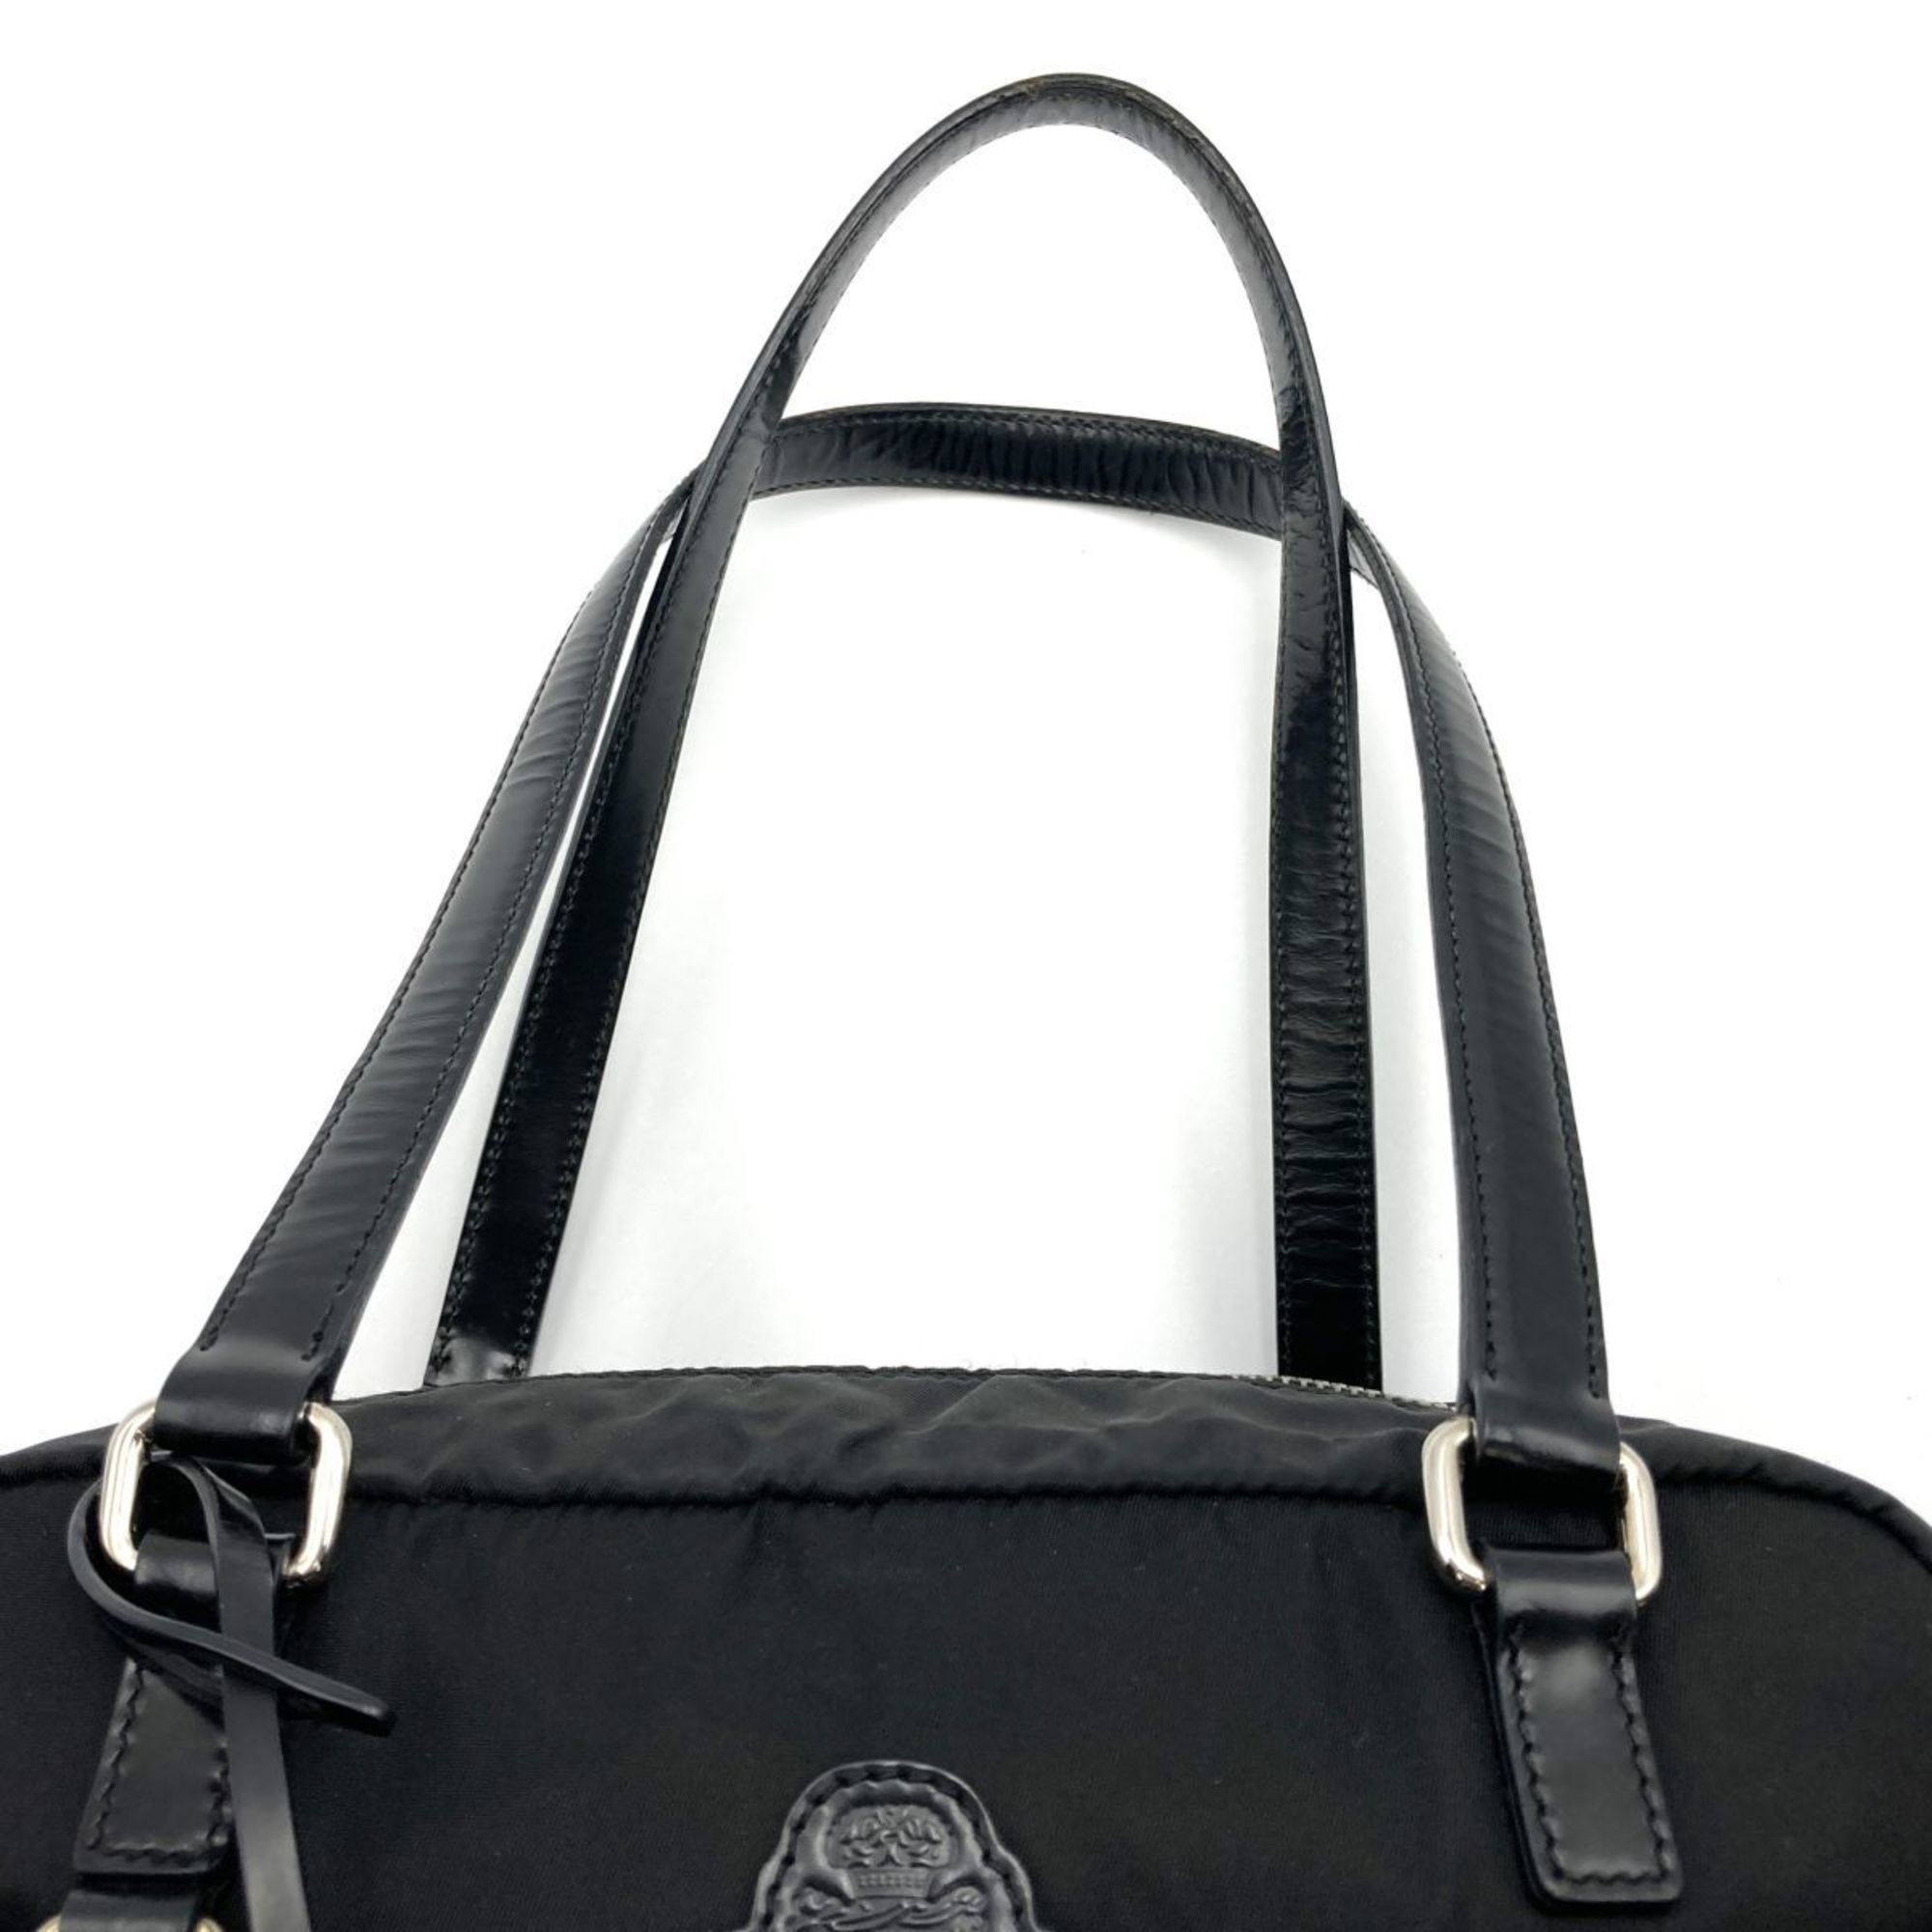 PRADA Prada tote bag shoulder logo mark black nylon leather ladies BR3150